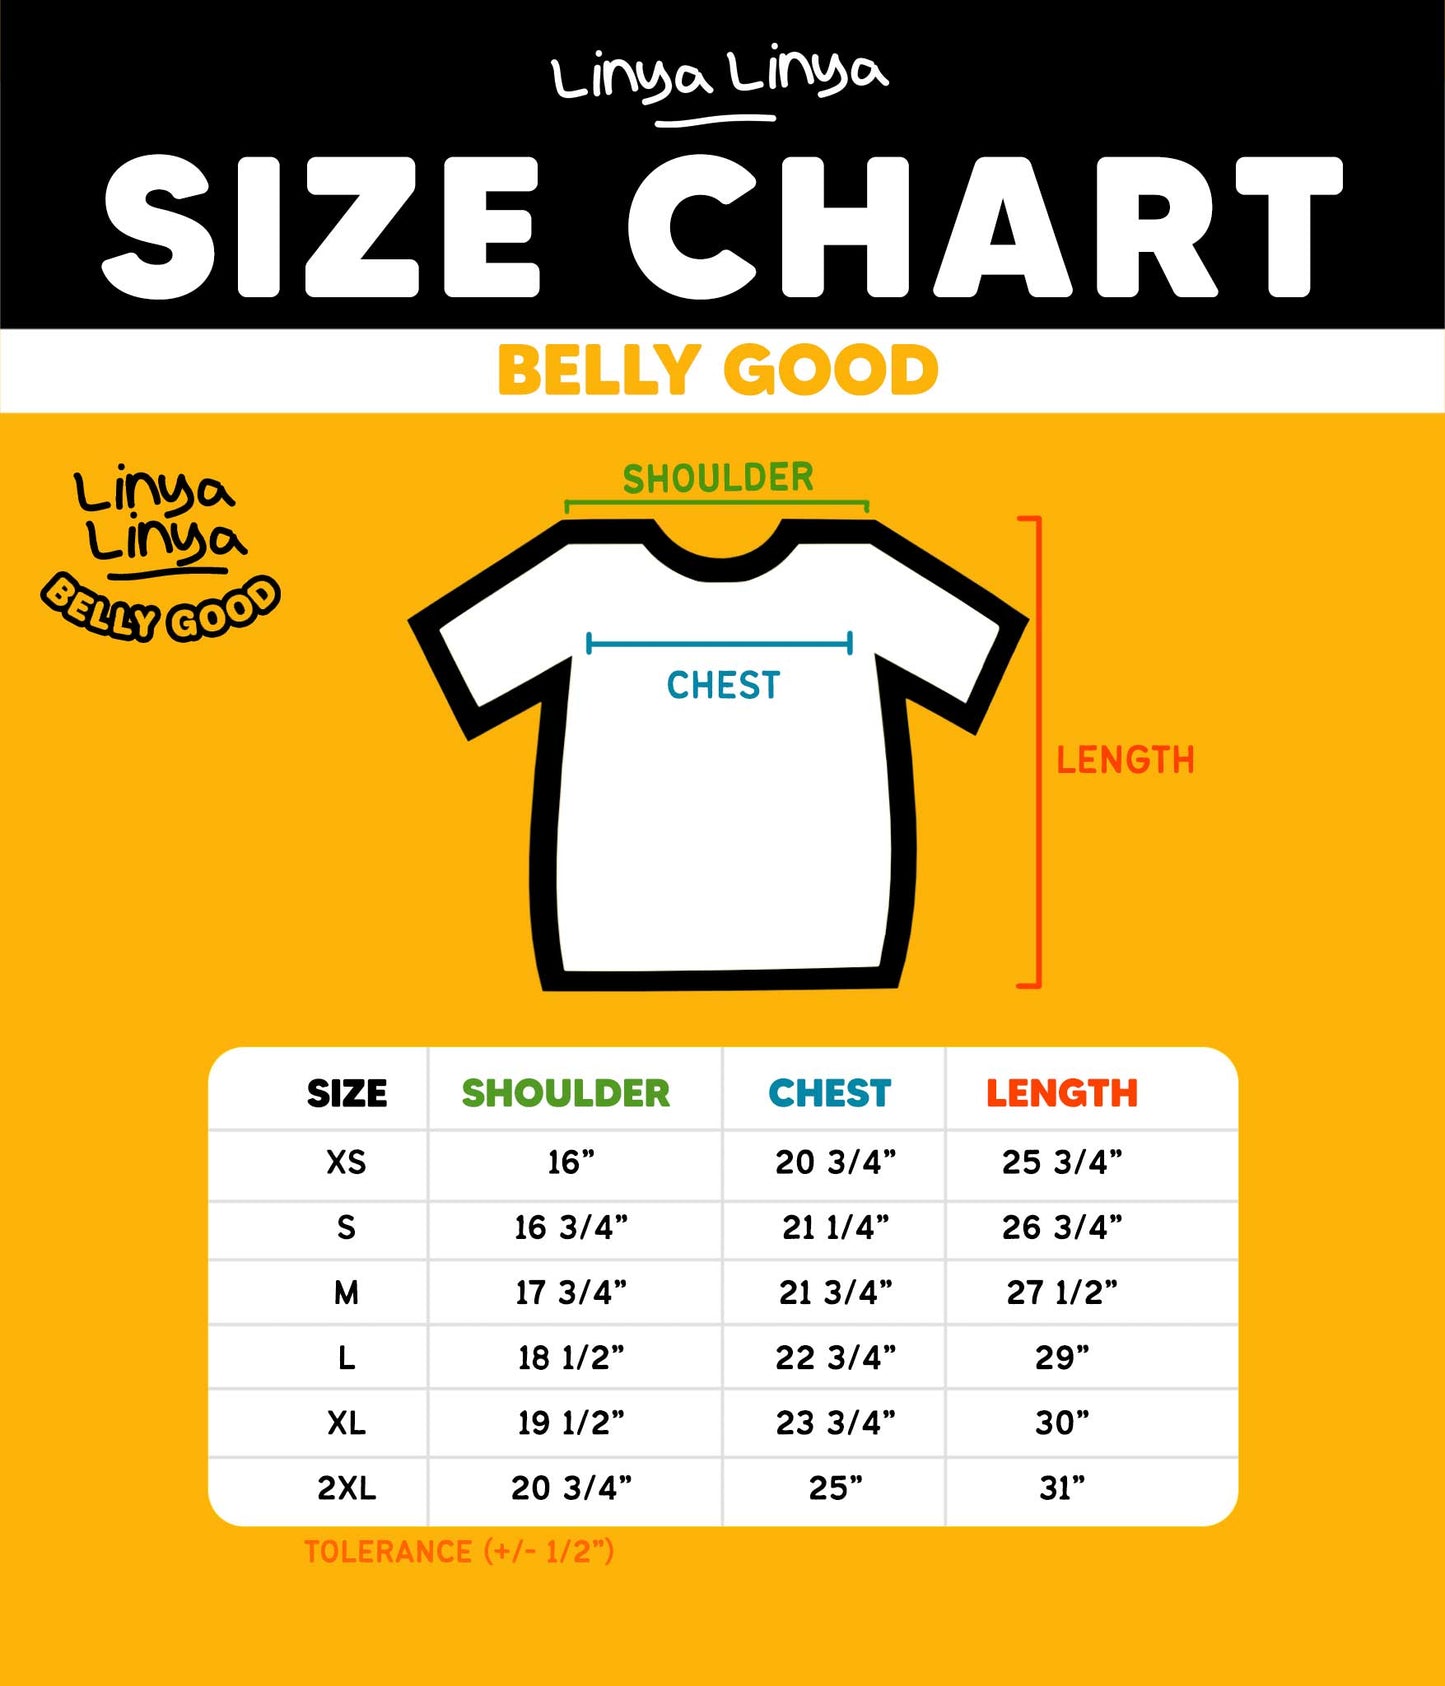 Belly Good: Linya-Linya x Pol Medina Jr: Weight Loss? Wait Lang! (Black)